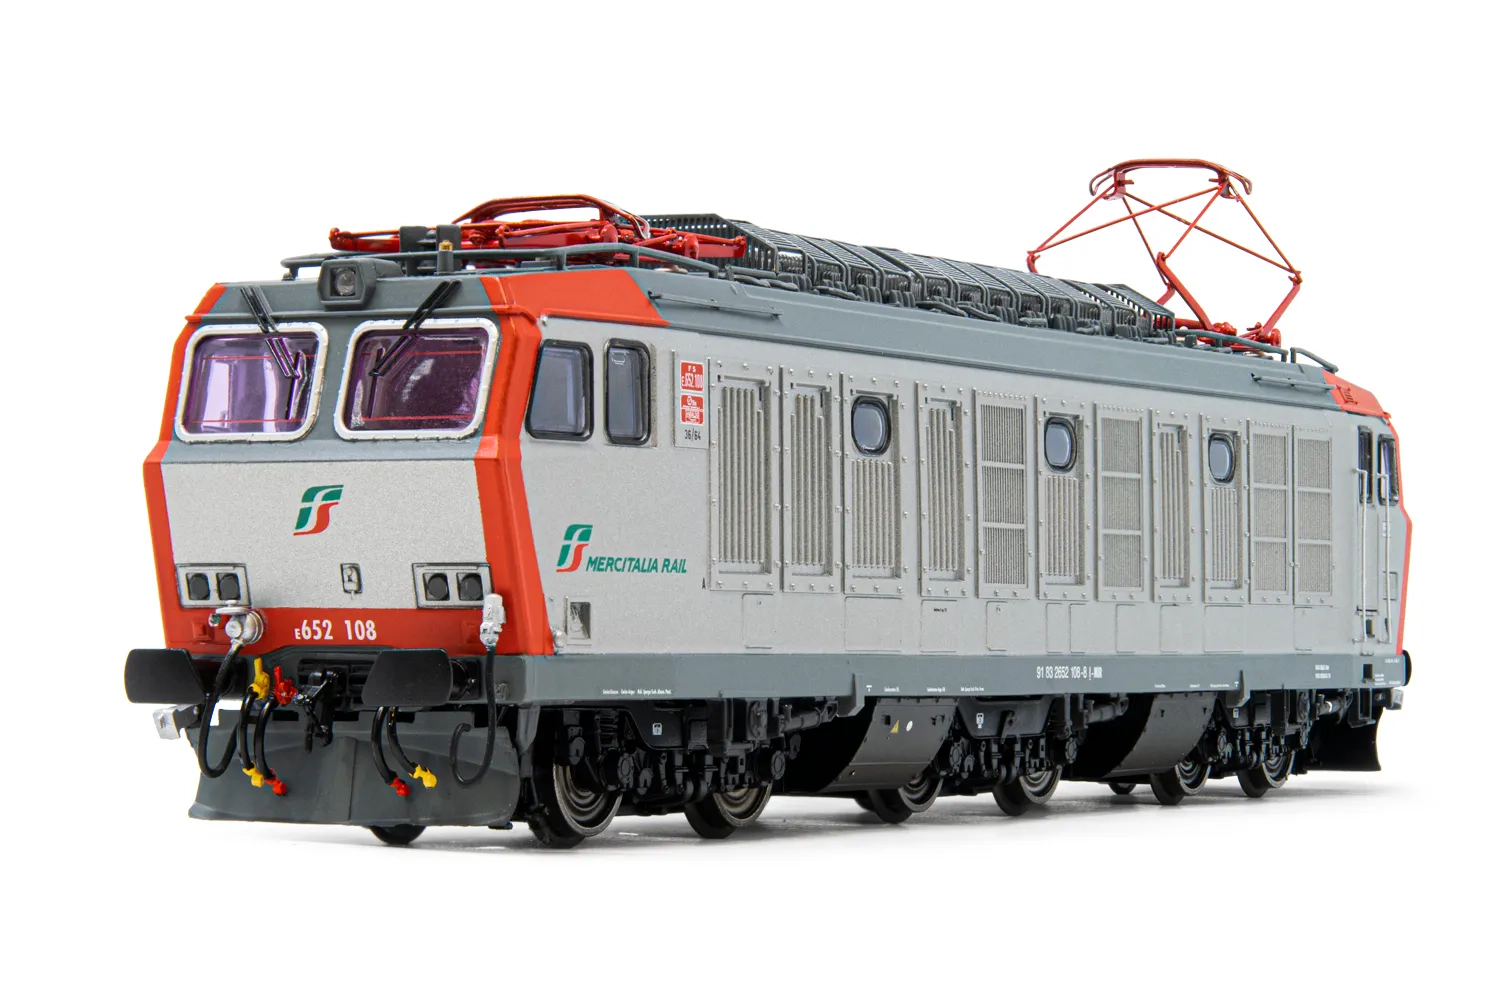 FS, electric locomotive class E.652 108, silver/red "FS Mercitalia" livery, period VI, with DCC-decoder